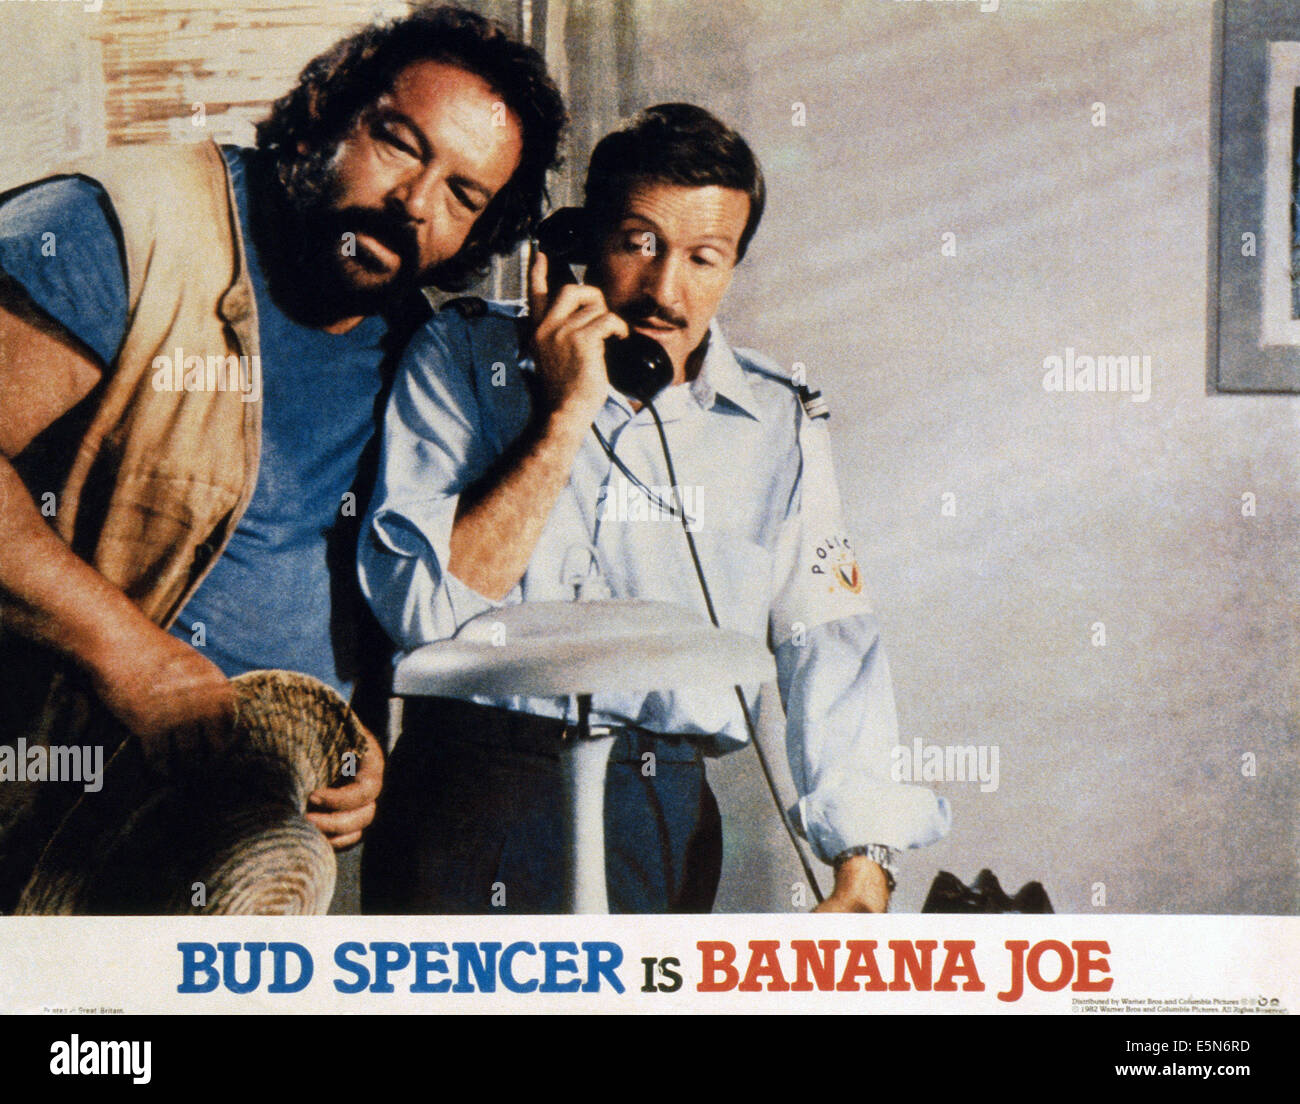 BANANA JOE, from left: Bud Spencer, Carlo Reali, 1982. ©Derby Cinematografica/courtesy Everett Collection Stock Photo